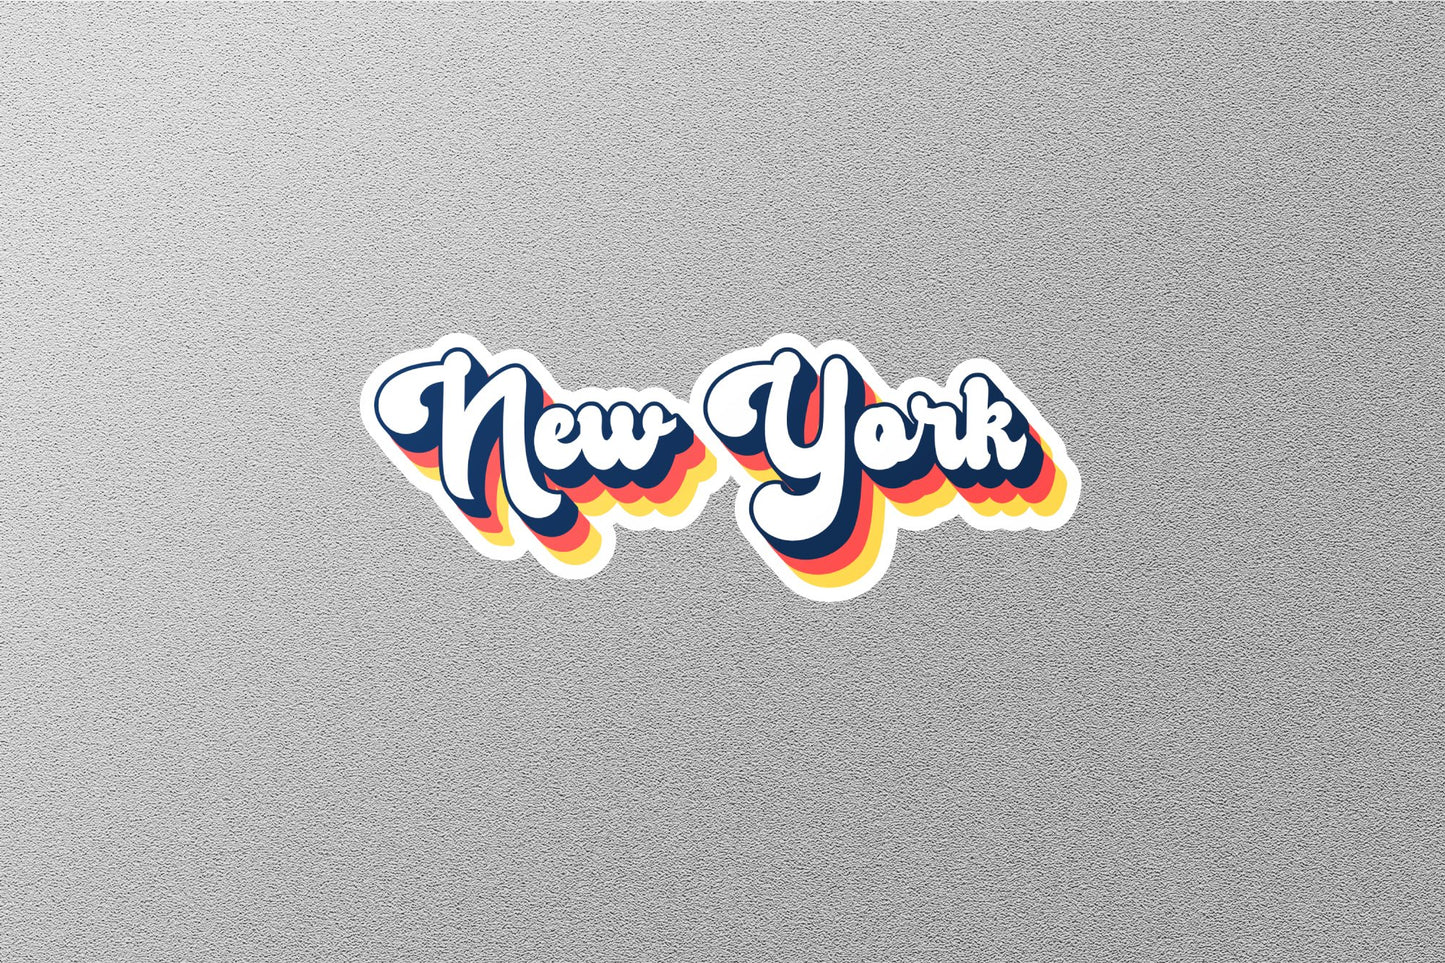 Retro New York State Sticker